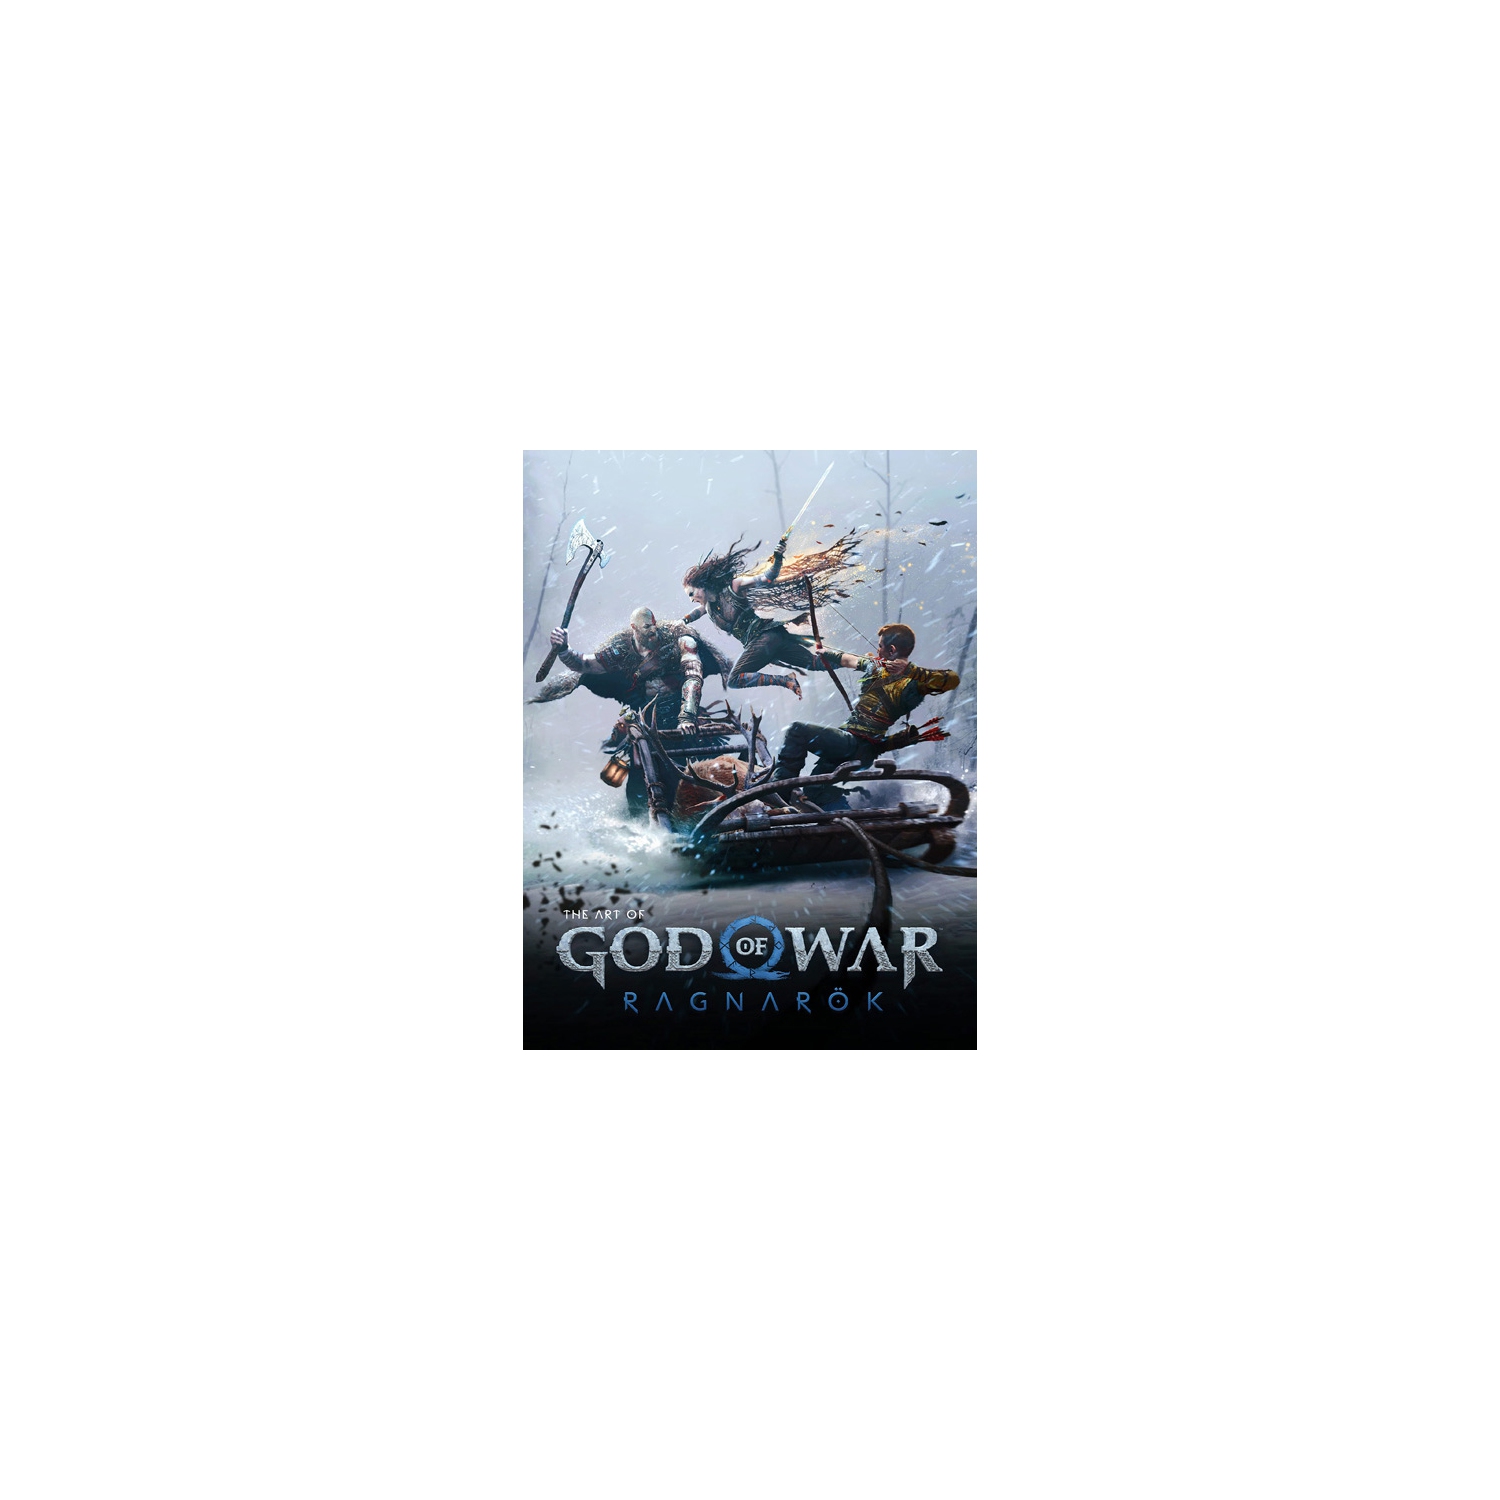 The Art of God of War Ragnarok Hardcover Art Book